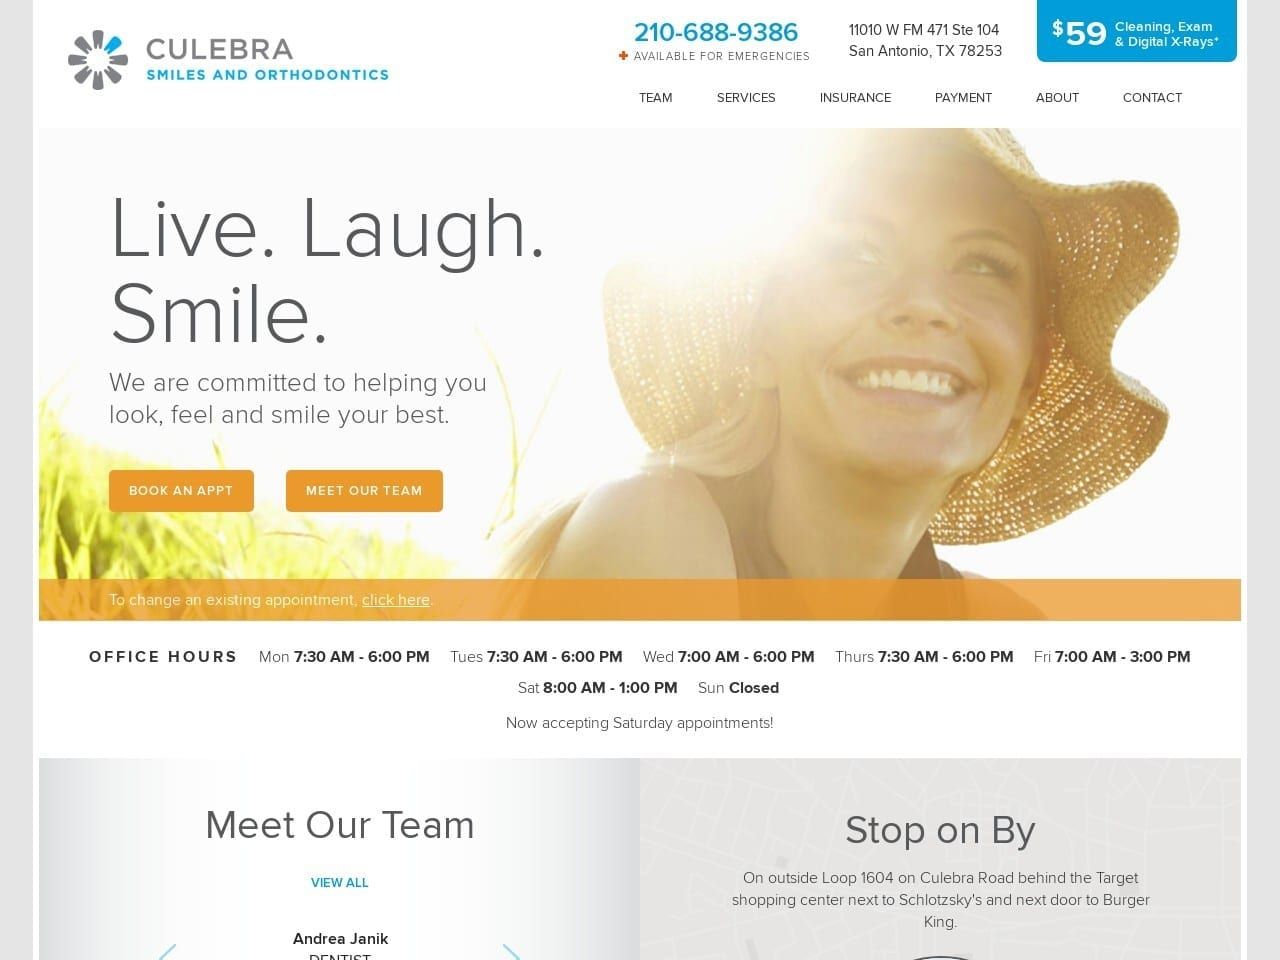 Culebra Smiles and Orthodontics Website Screenshot from culebrasmiles.com